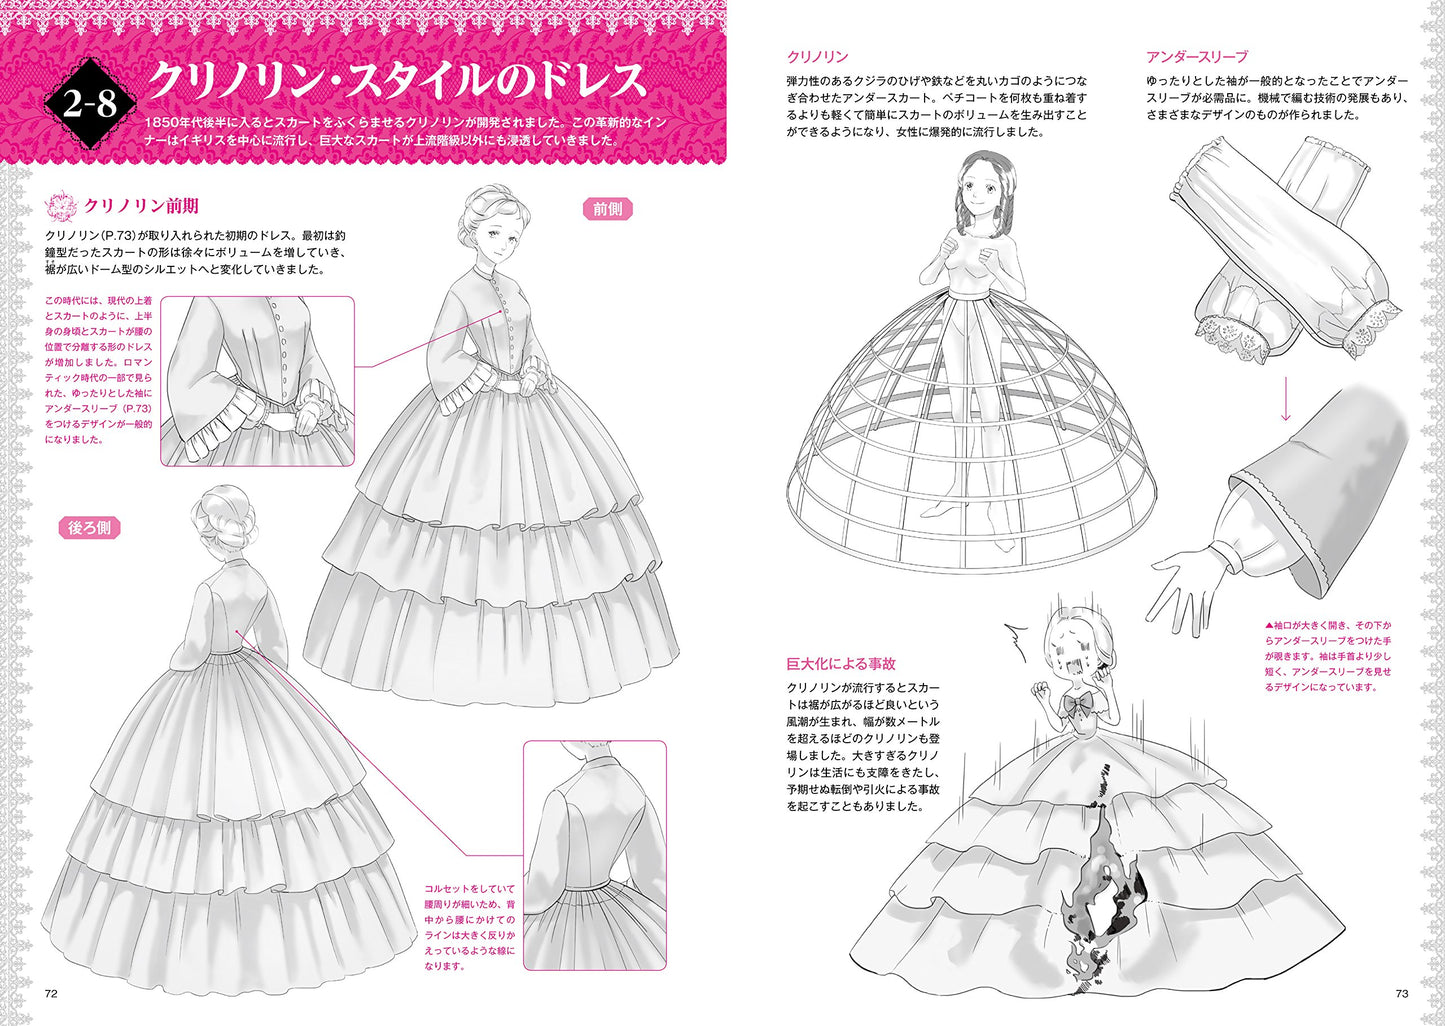 Let's Draw a Princess Dress